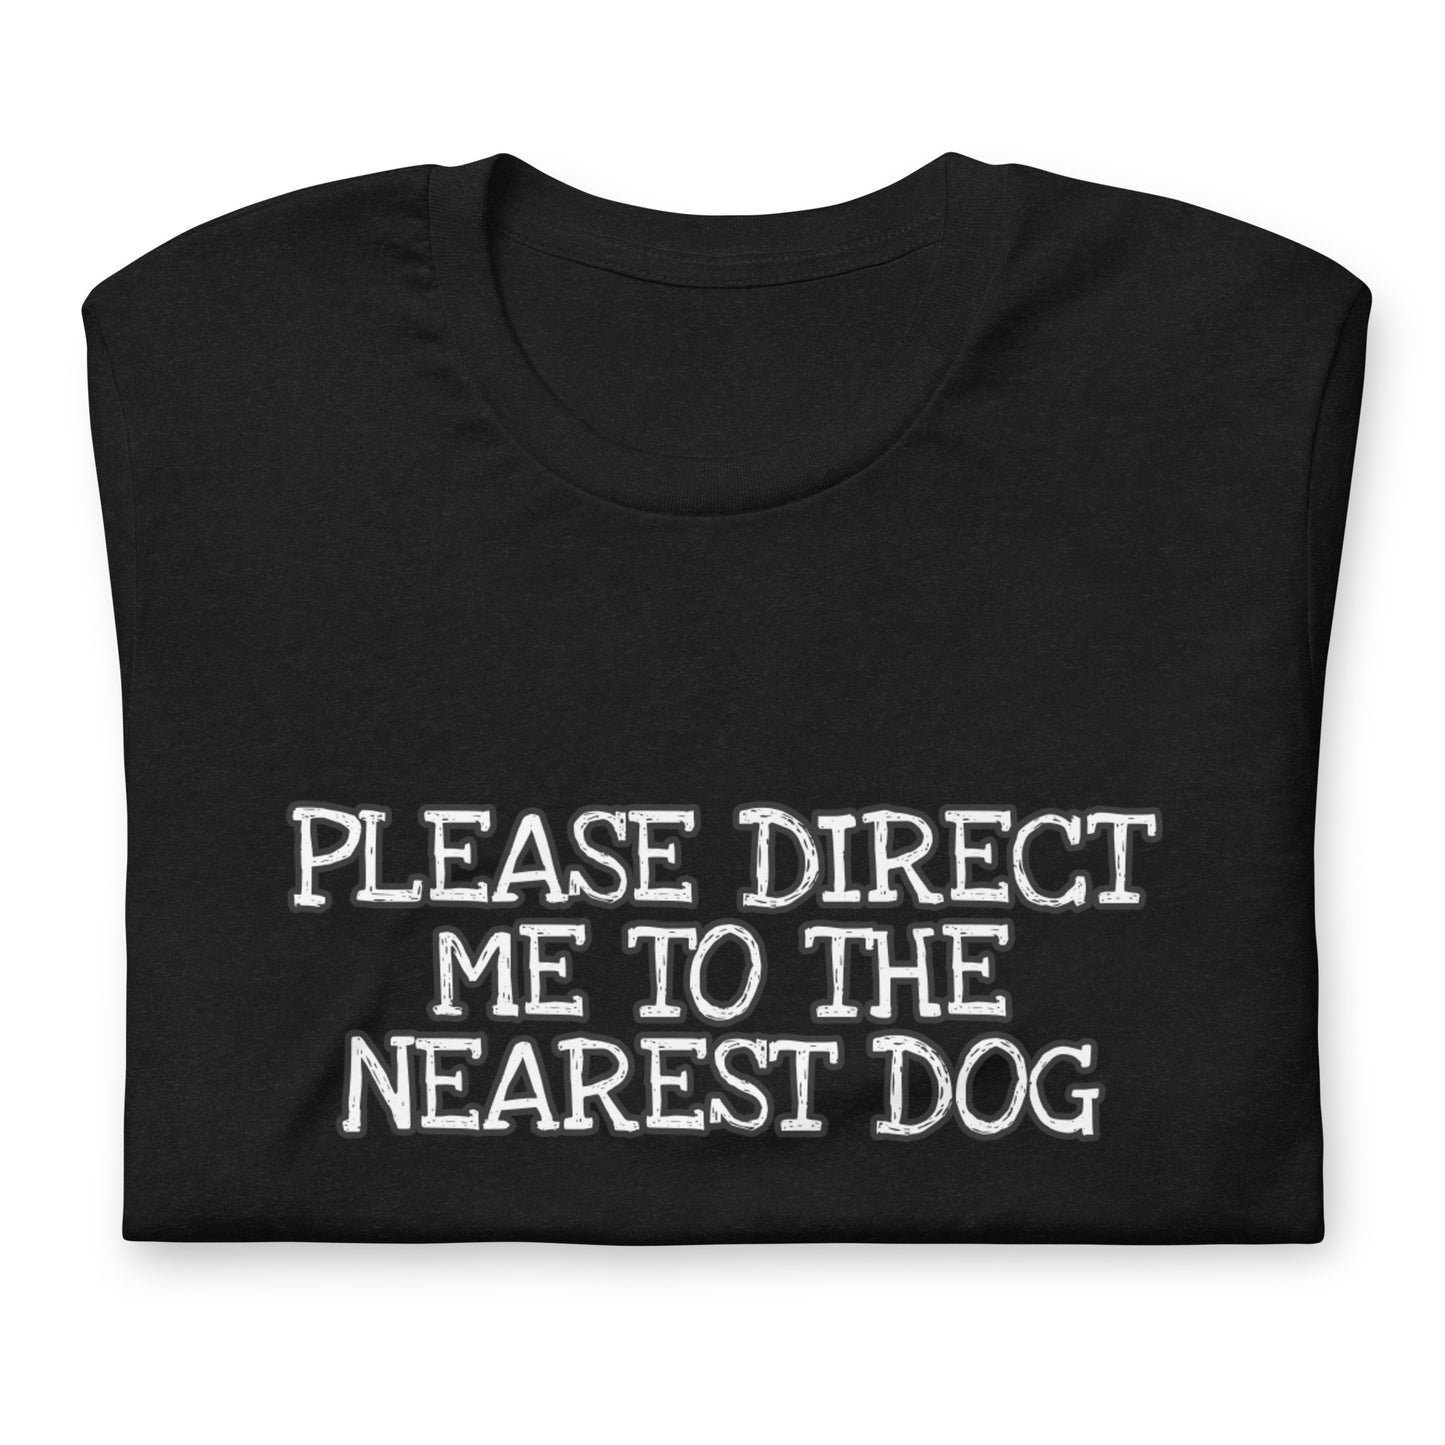 Nearest Dog?